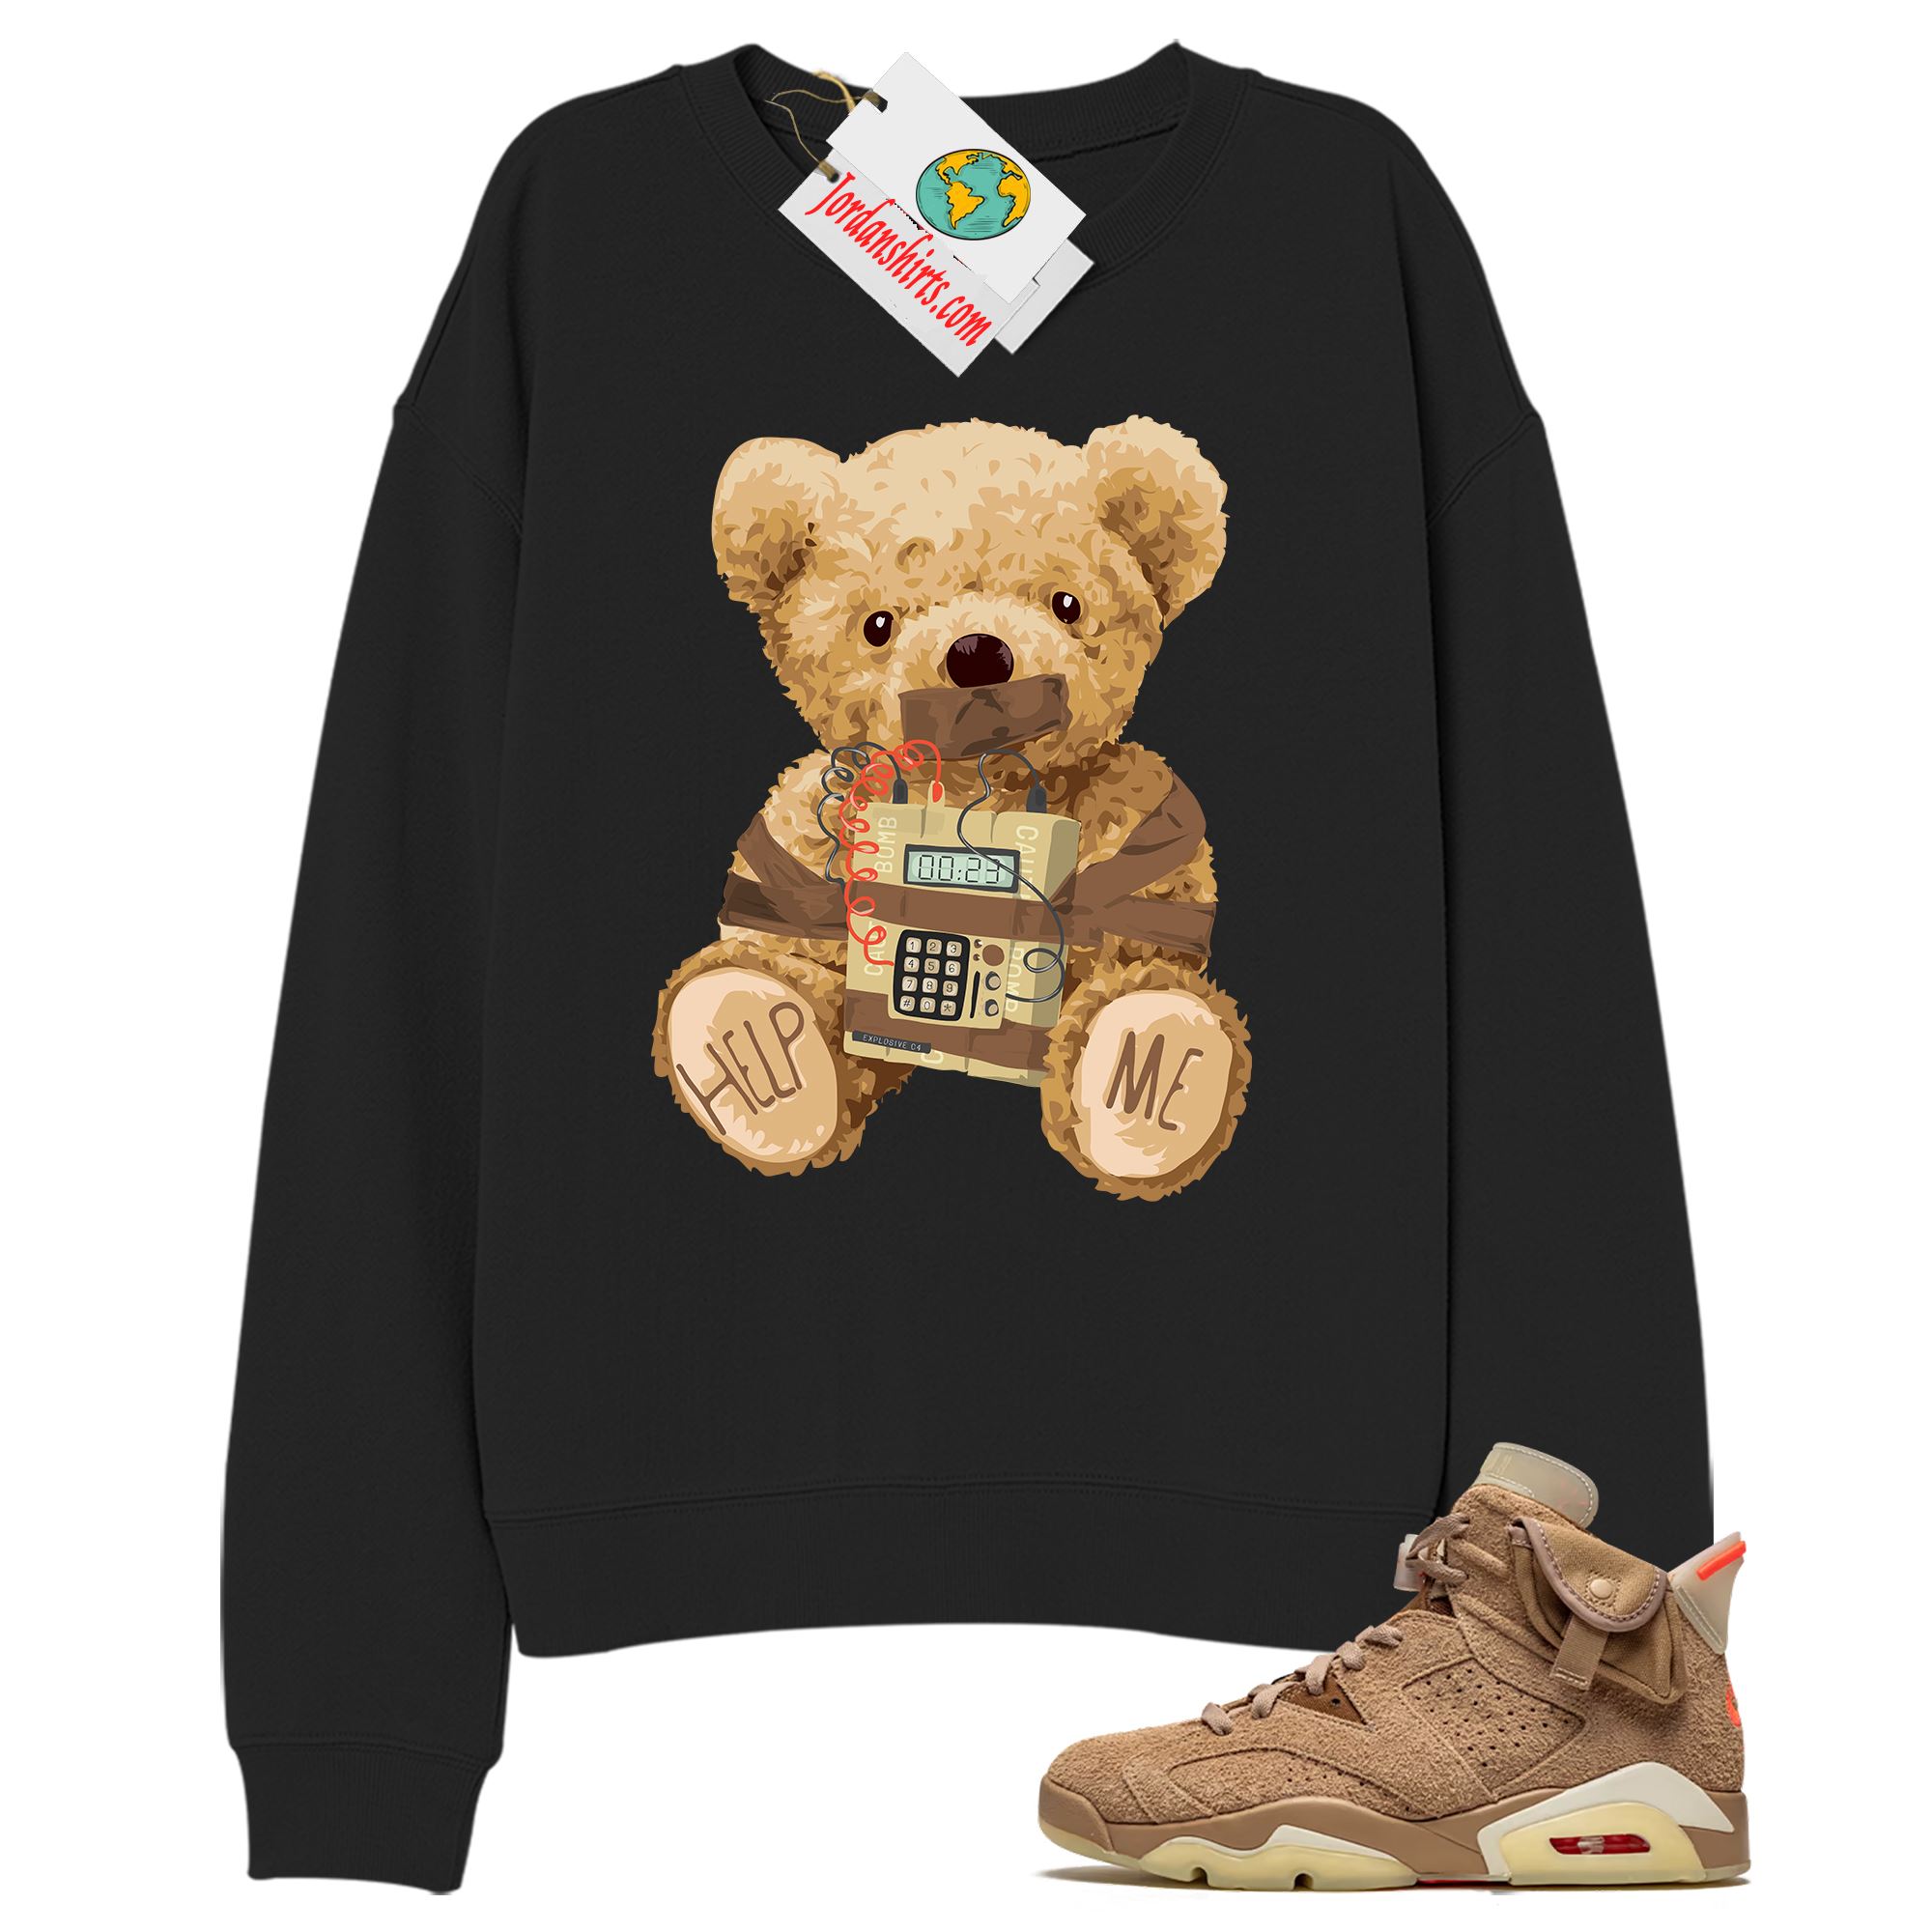 Jordan 6 Sweatshirt, Teddy Bear Bomb Black Sweatshirt Air Jordan 6 Travis Scott 6s Full Size Up To 5xl